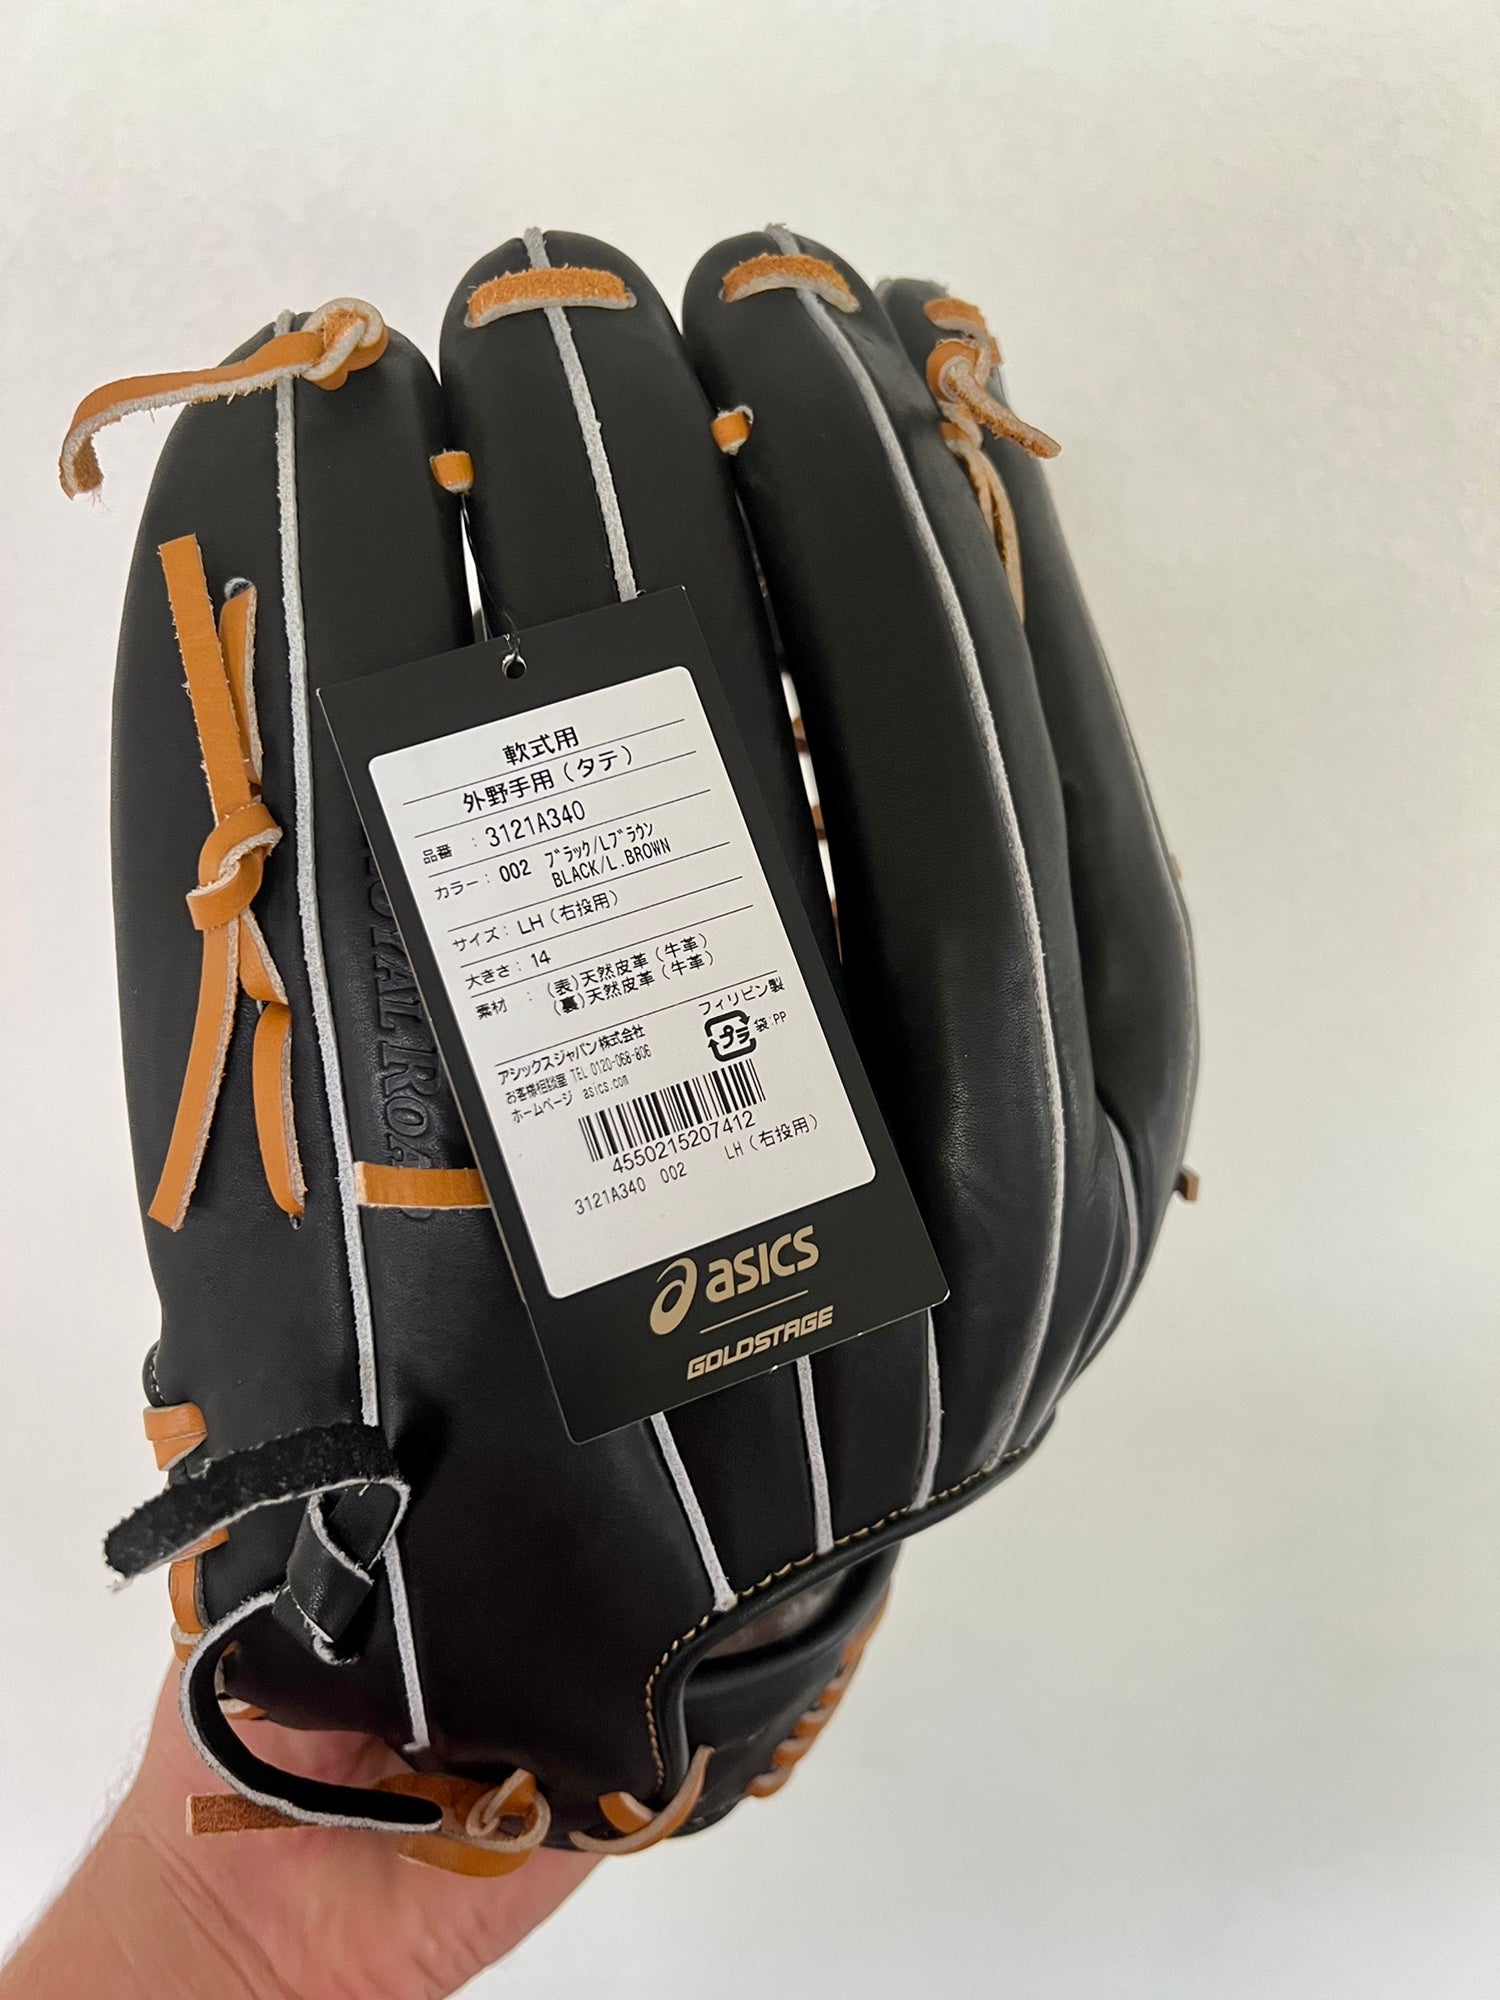 Asics gold stage baseball glove | SidelineSwap